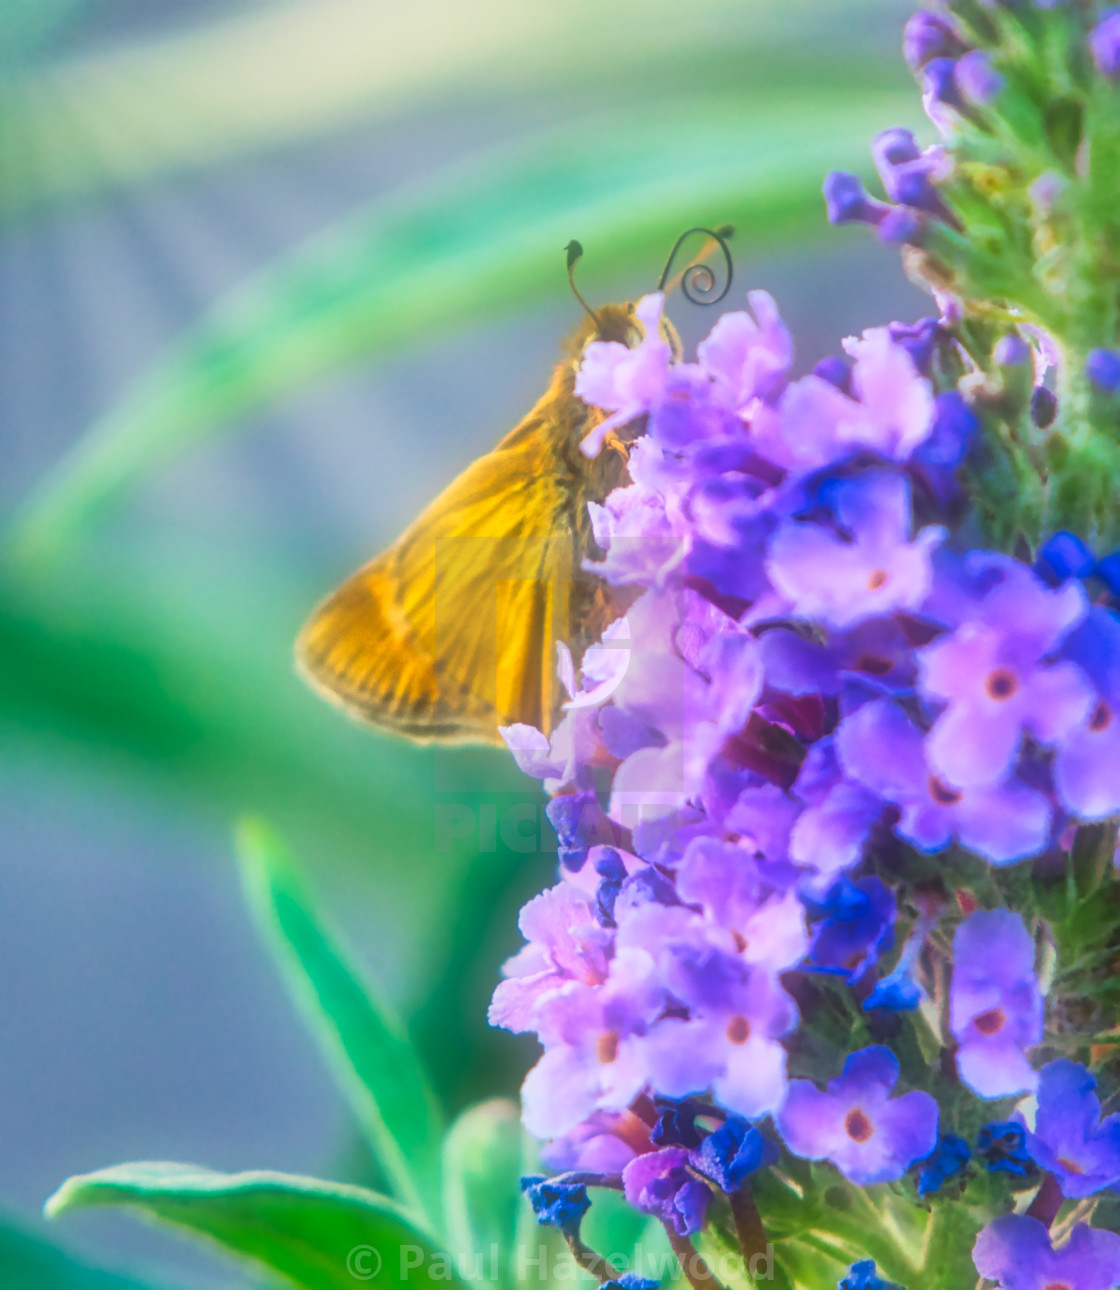 "Moth on a butterfly bush" stock image